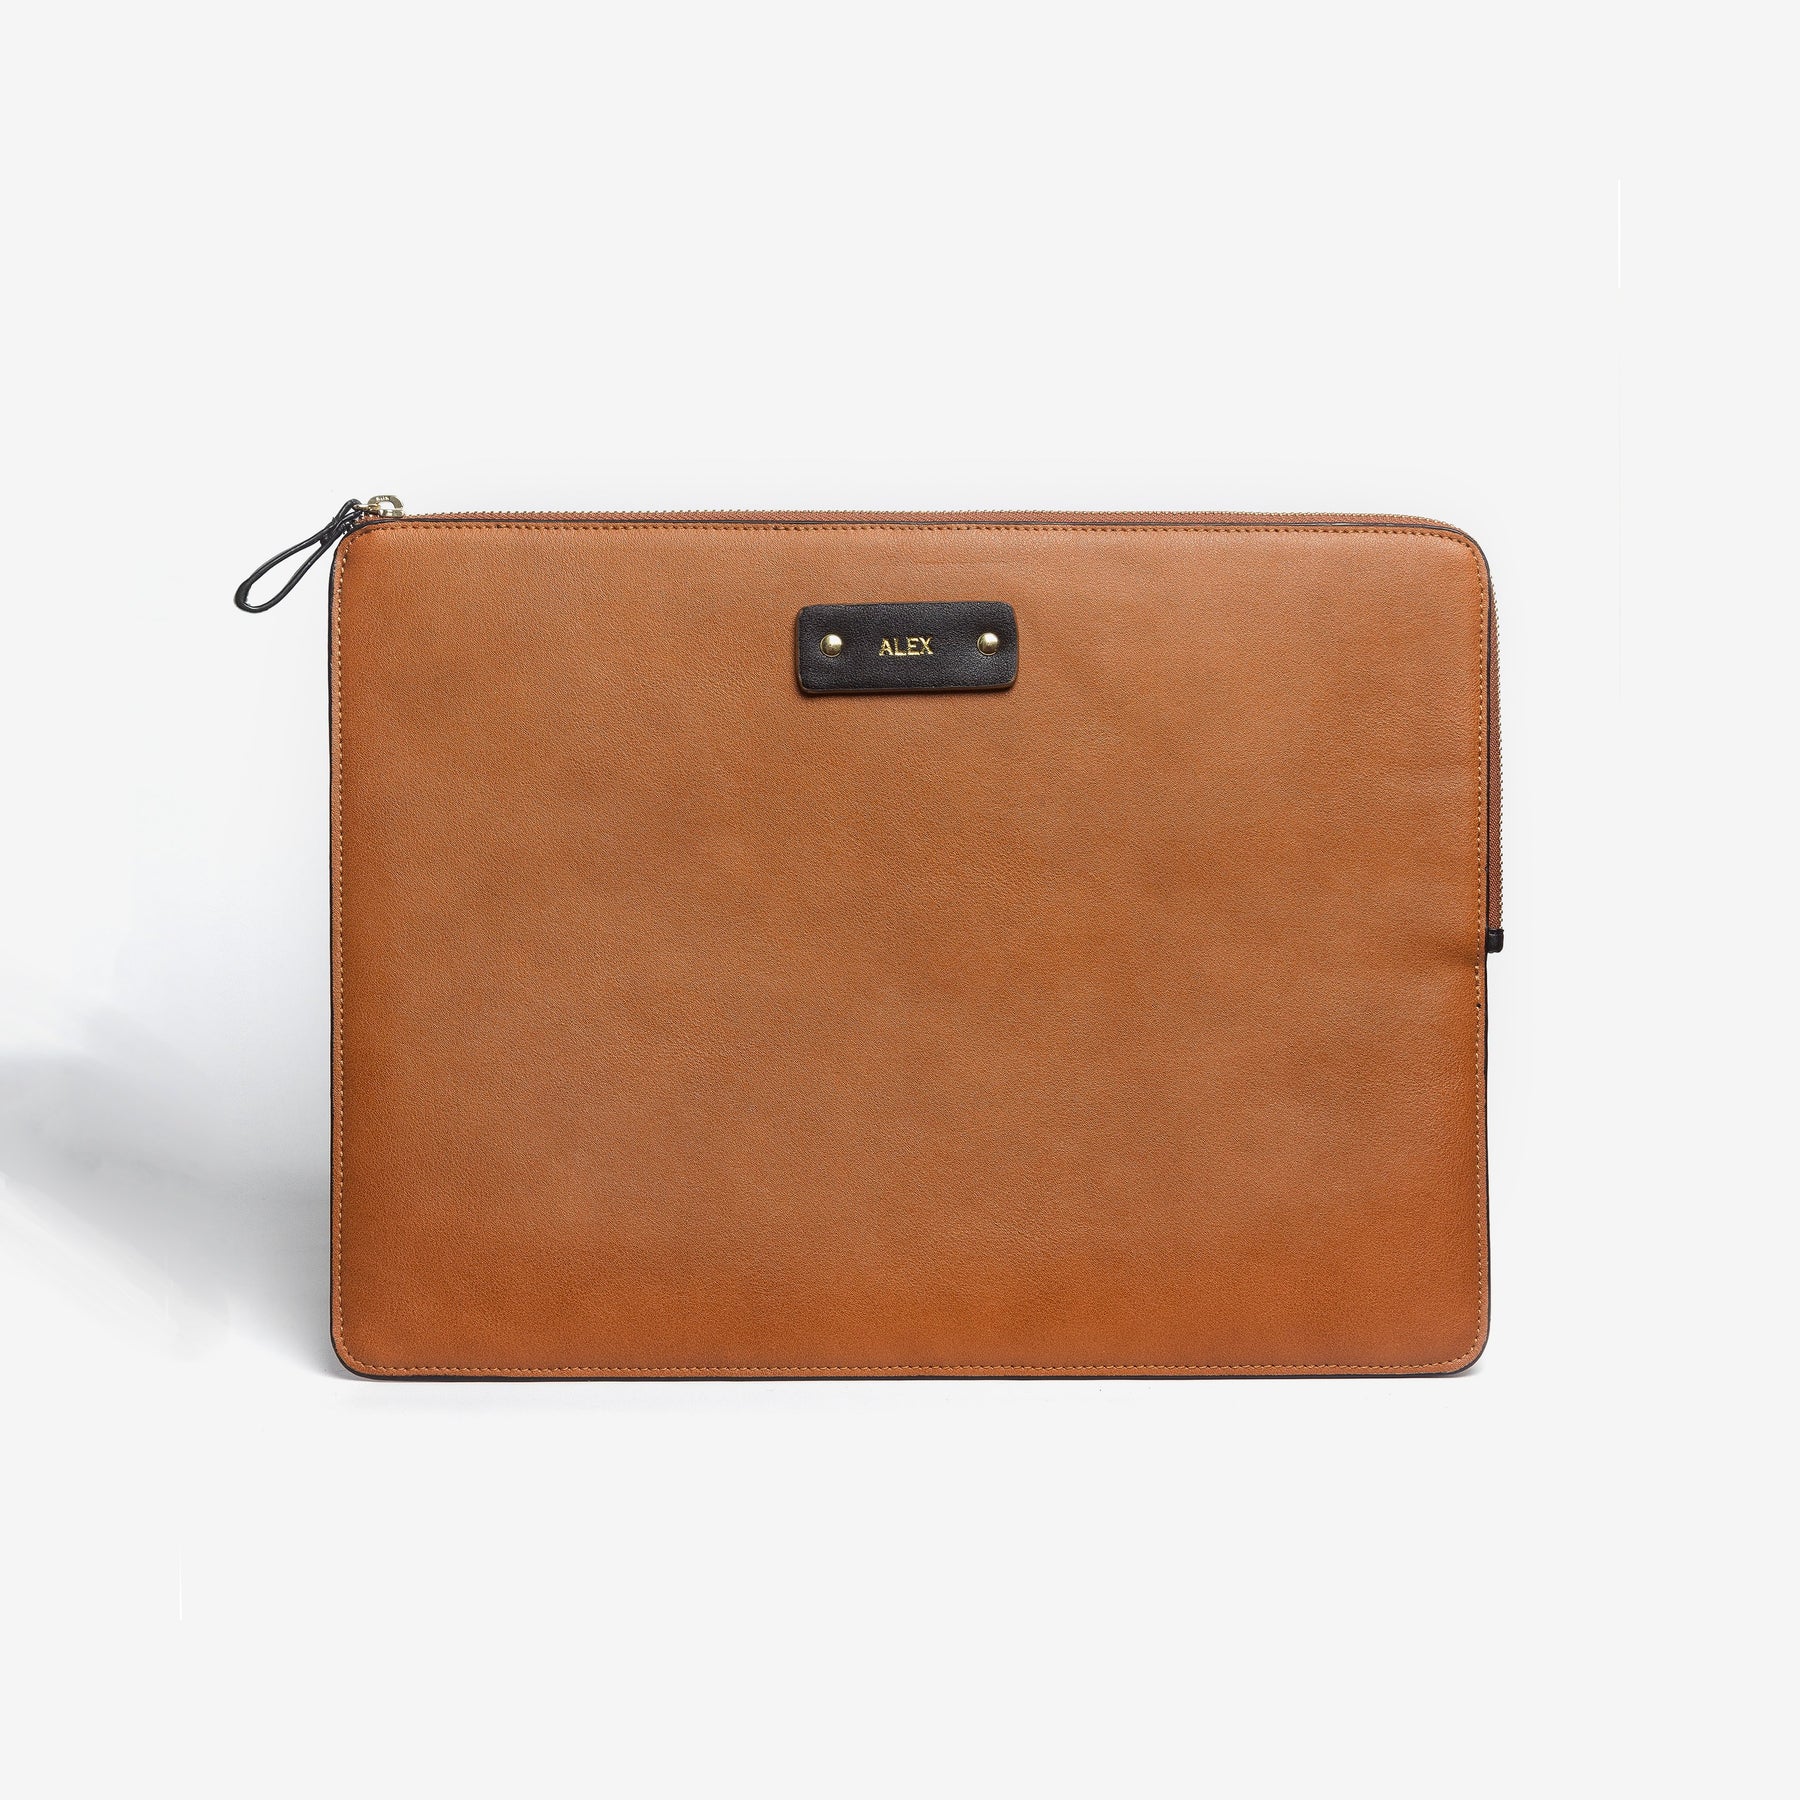 Buy Beautiful Laptop  iPad Bag Online  fredefy  Fredefy